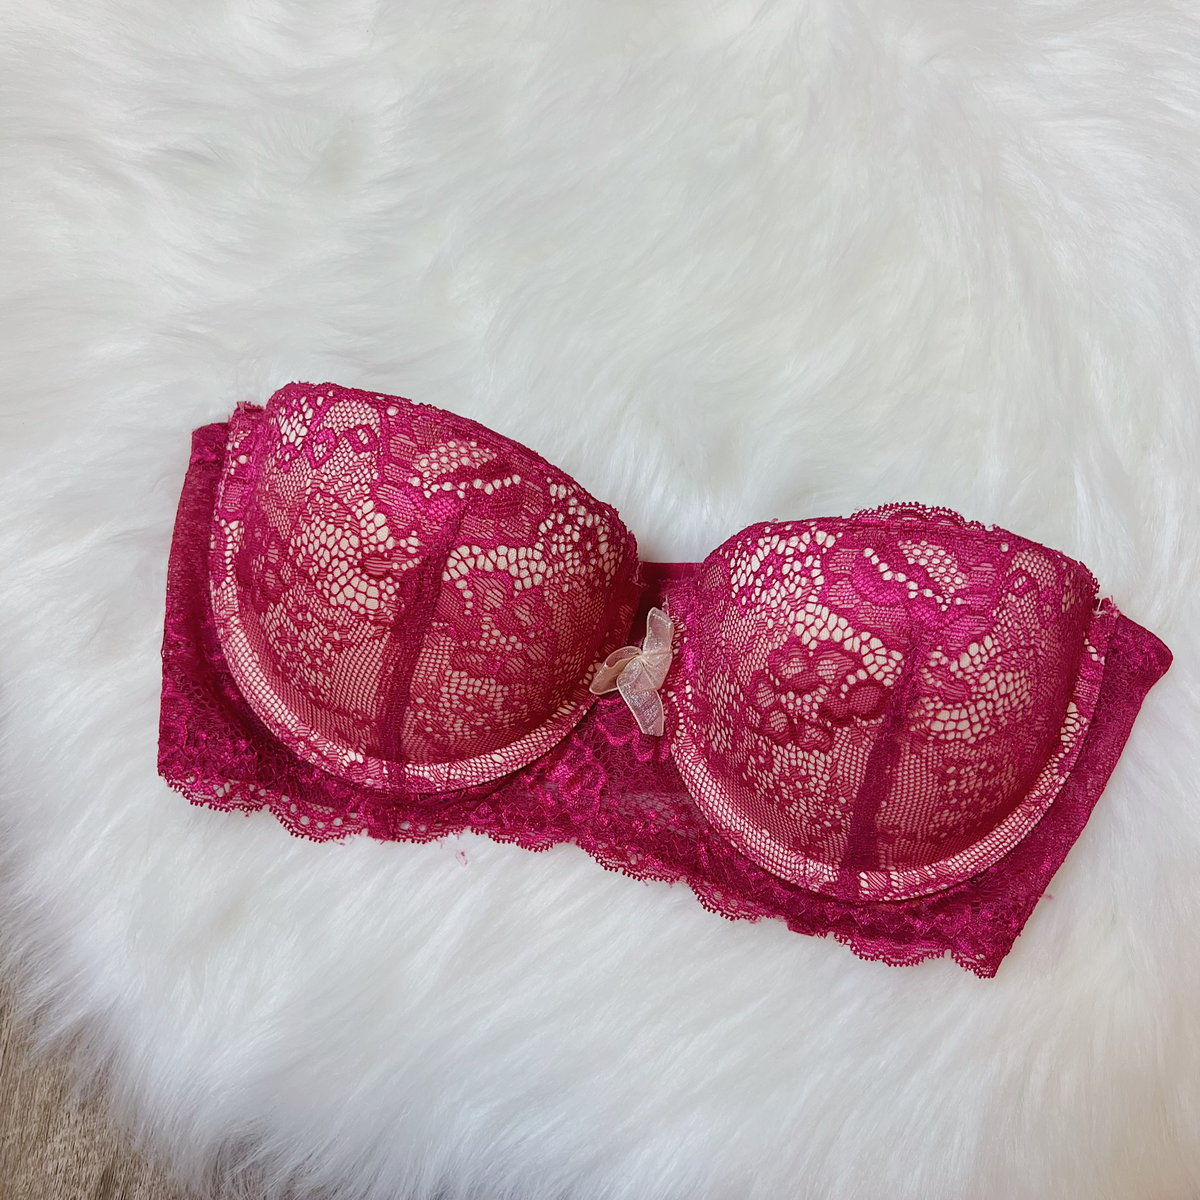 Kayser Brazilian Original Style Ladies Grenadine Pink Lace Bra Size 12A New